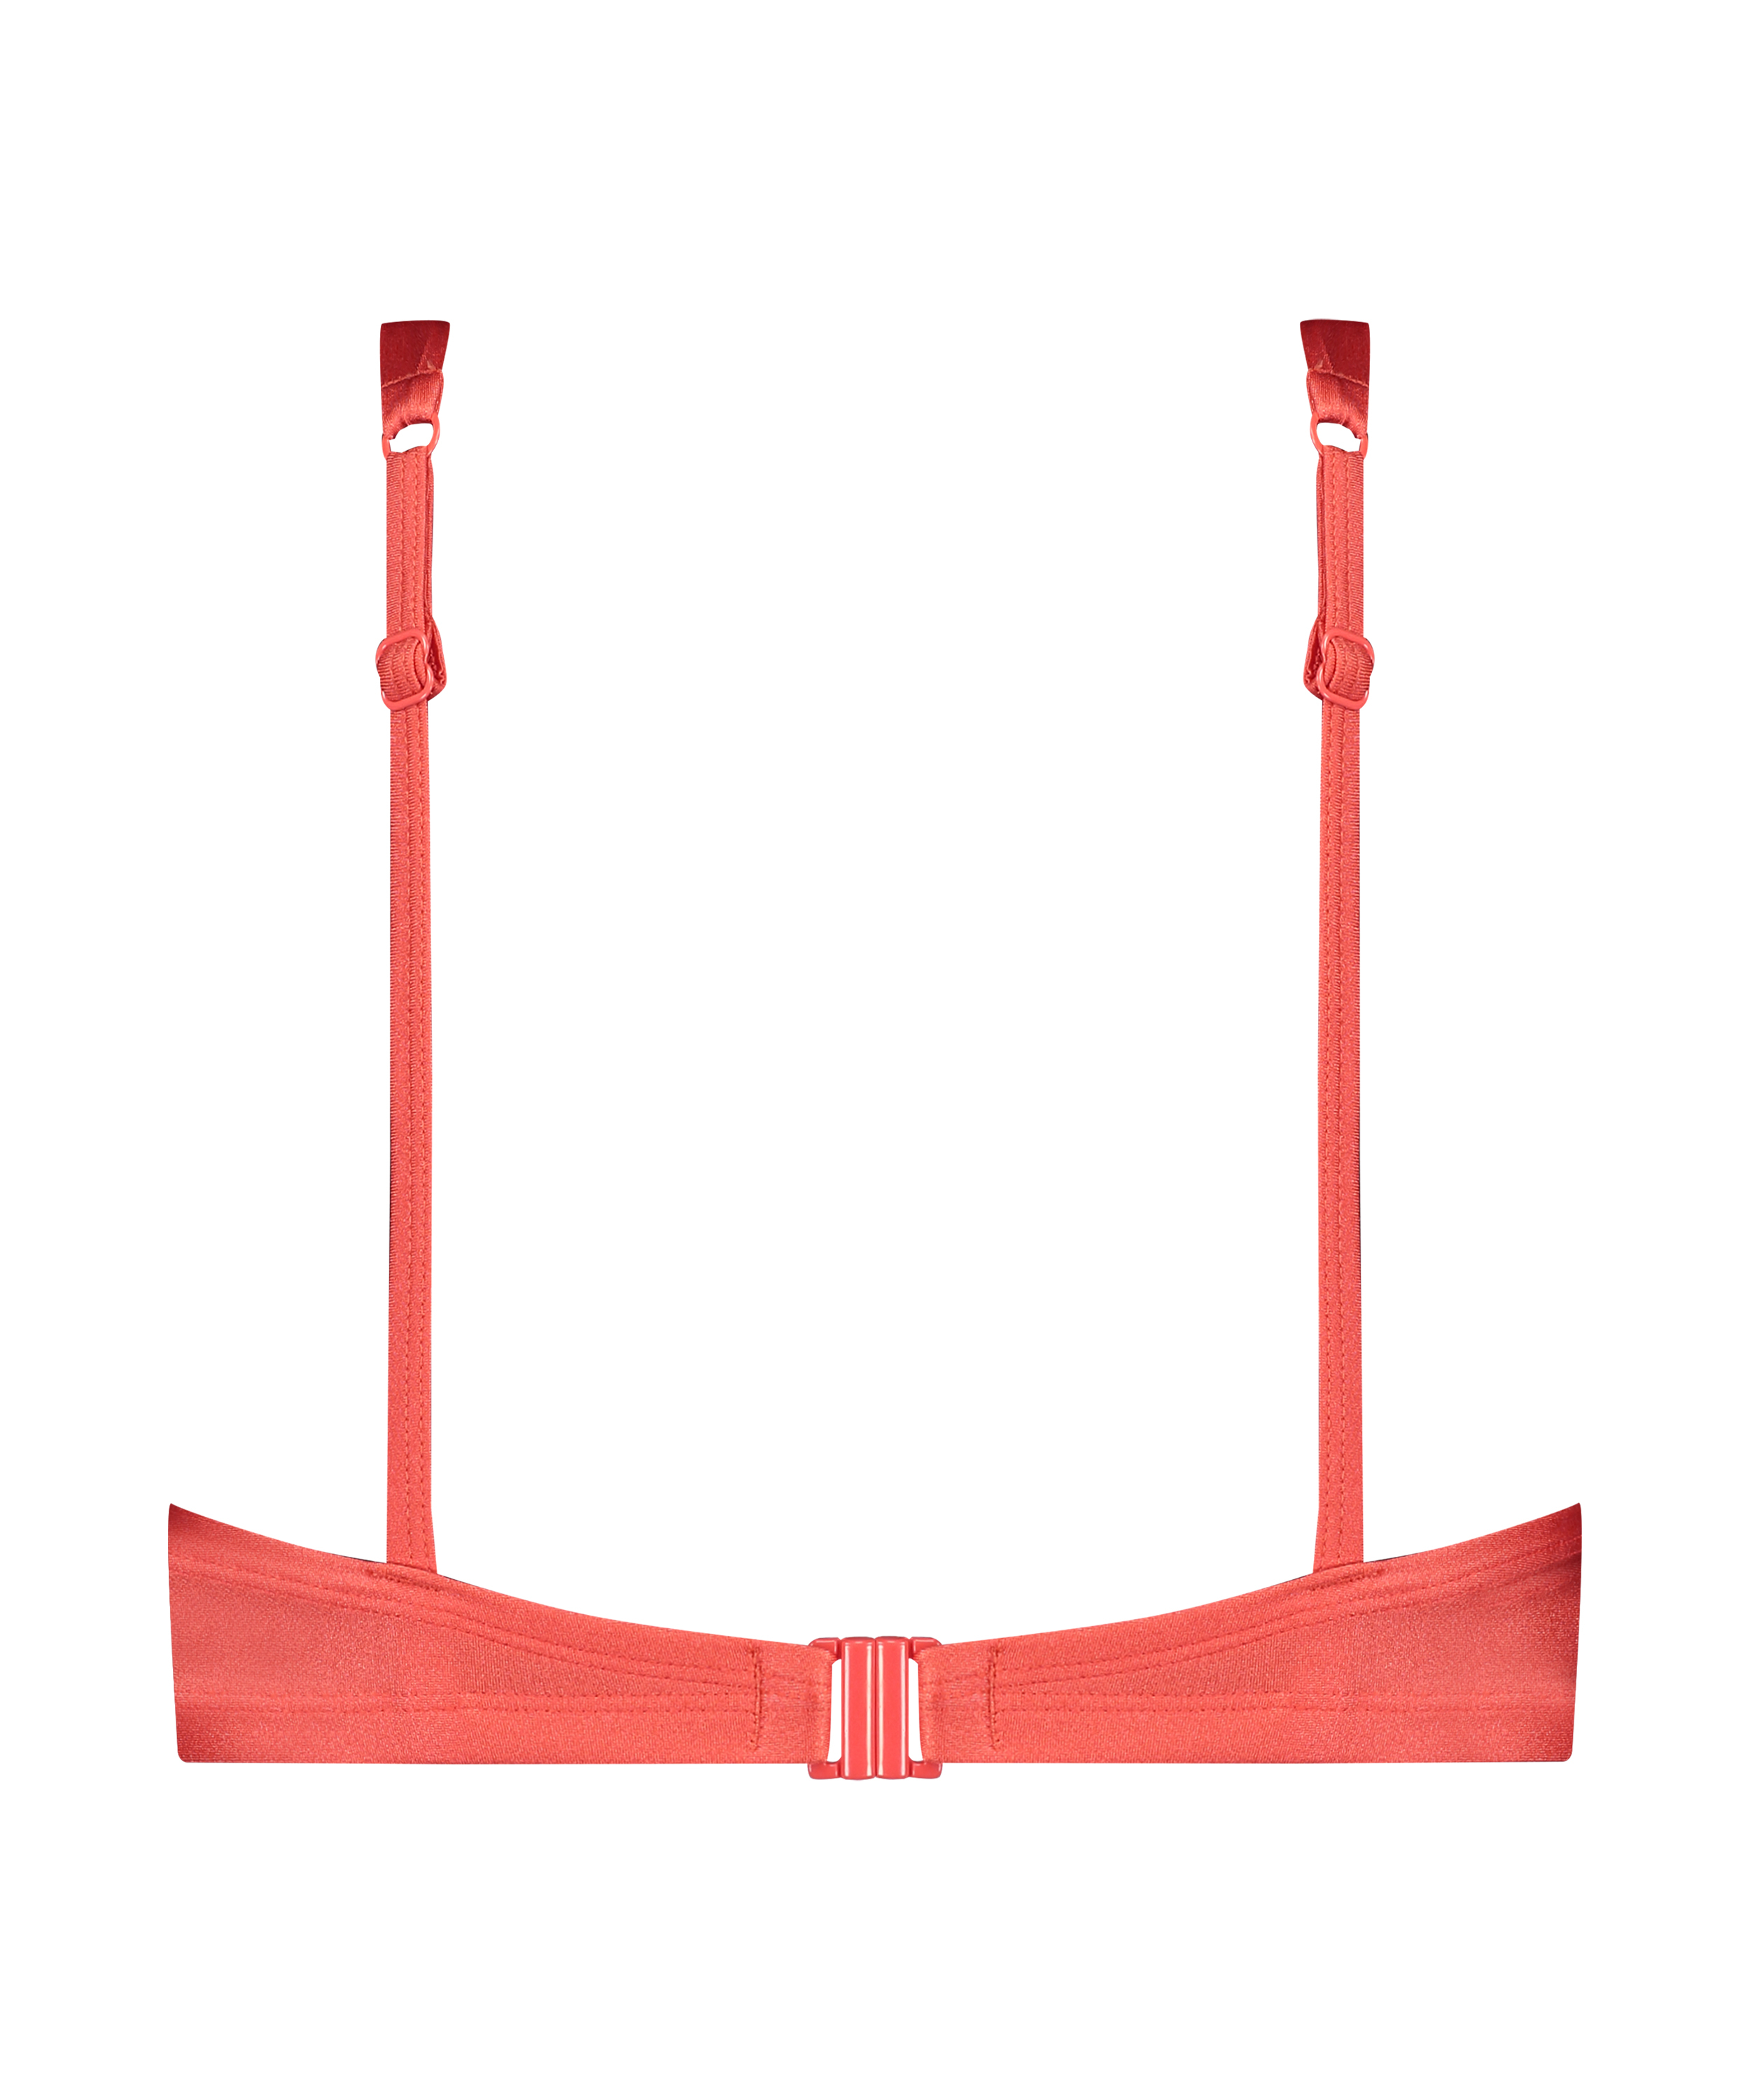 Luxe formstøbt bikinitop med bøjle Størrelse E +, rød, main